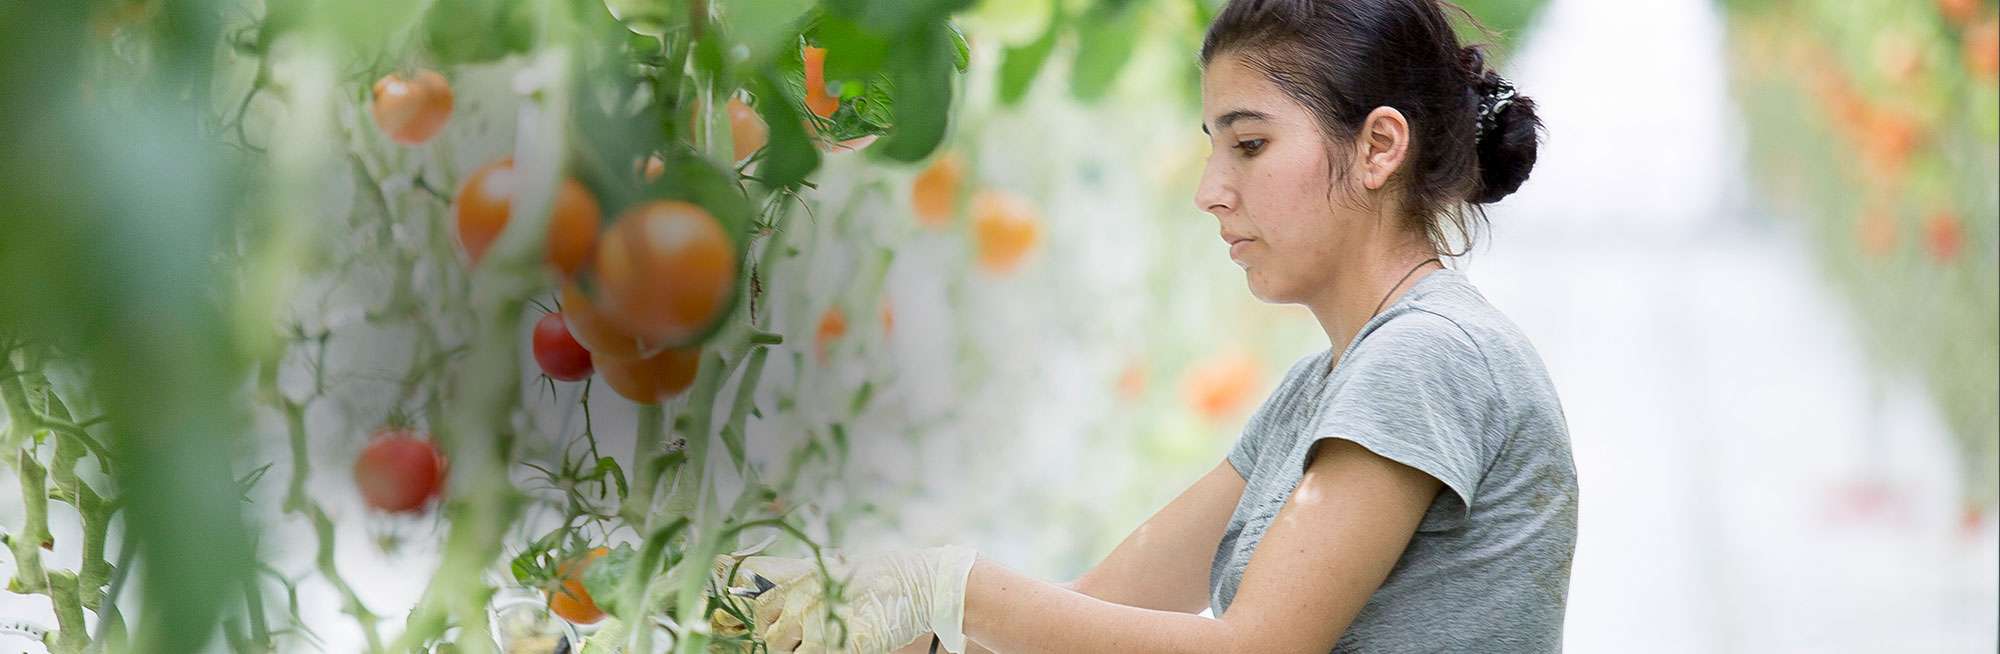 Richel tomato greenhouses